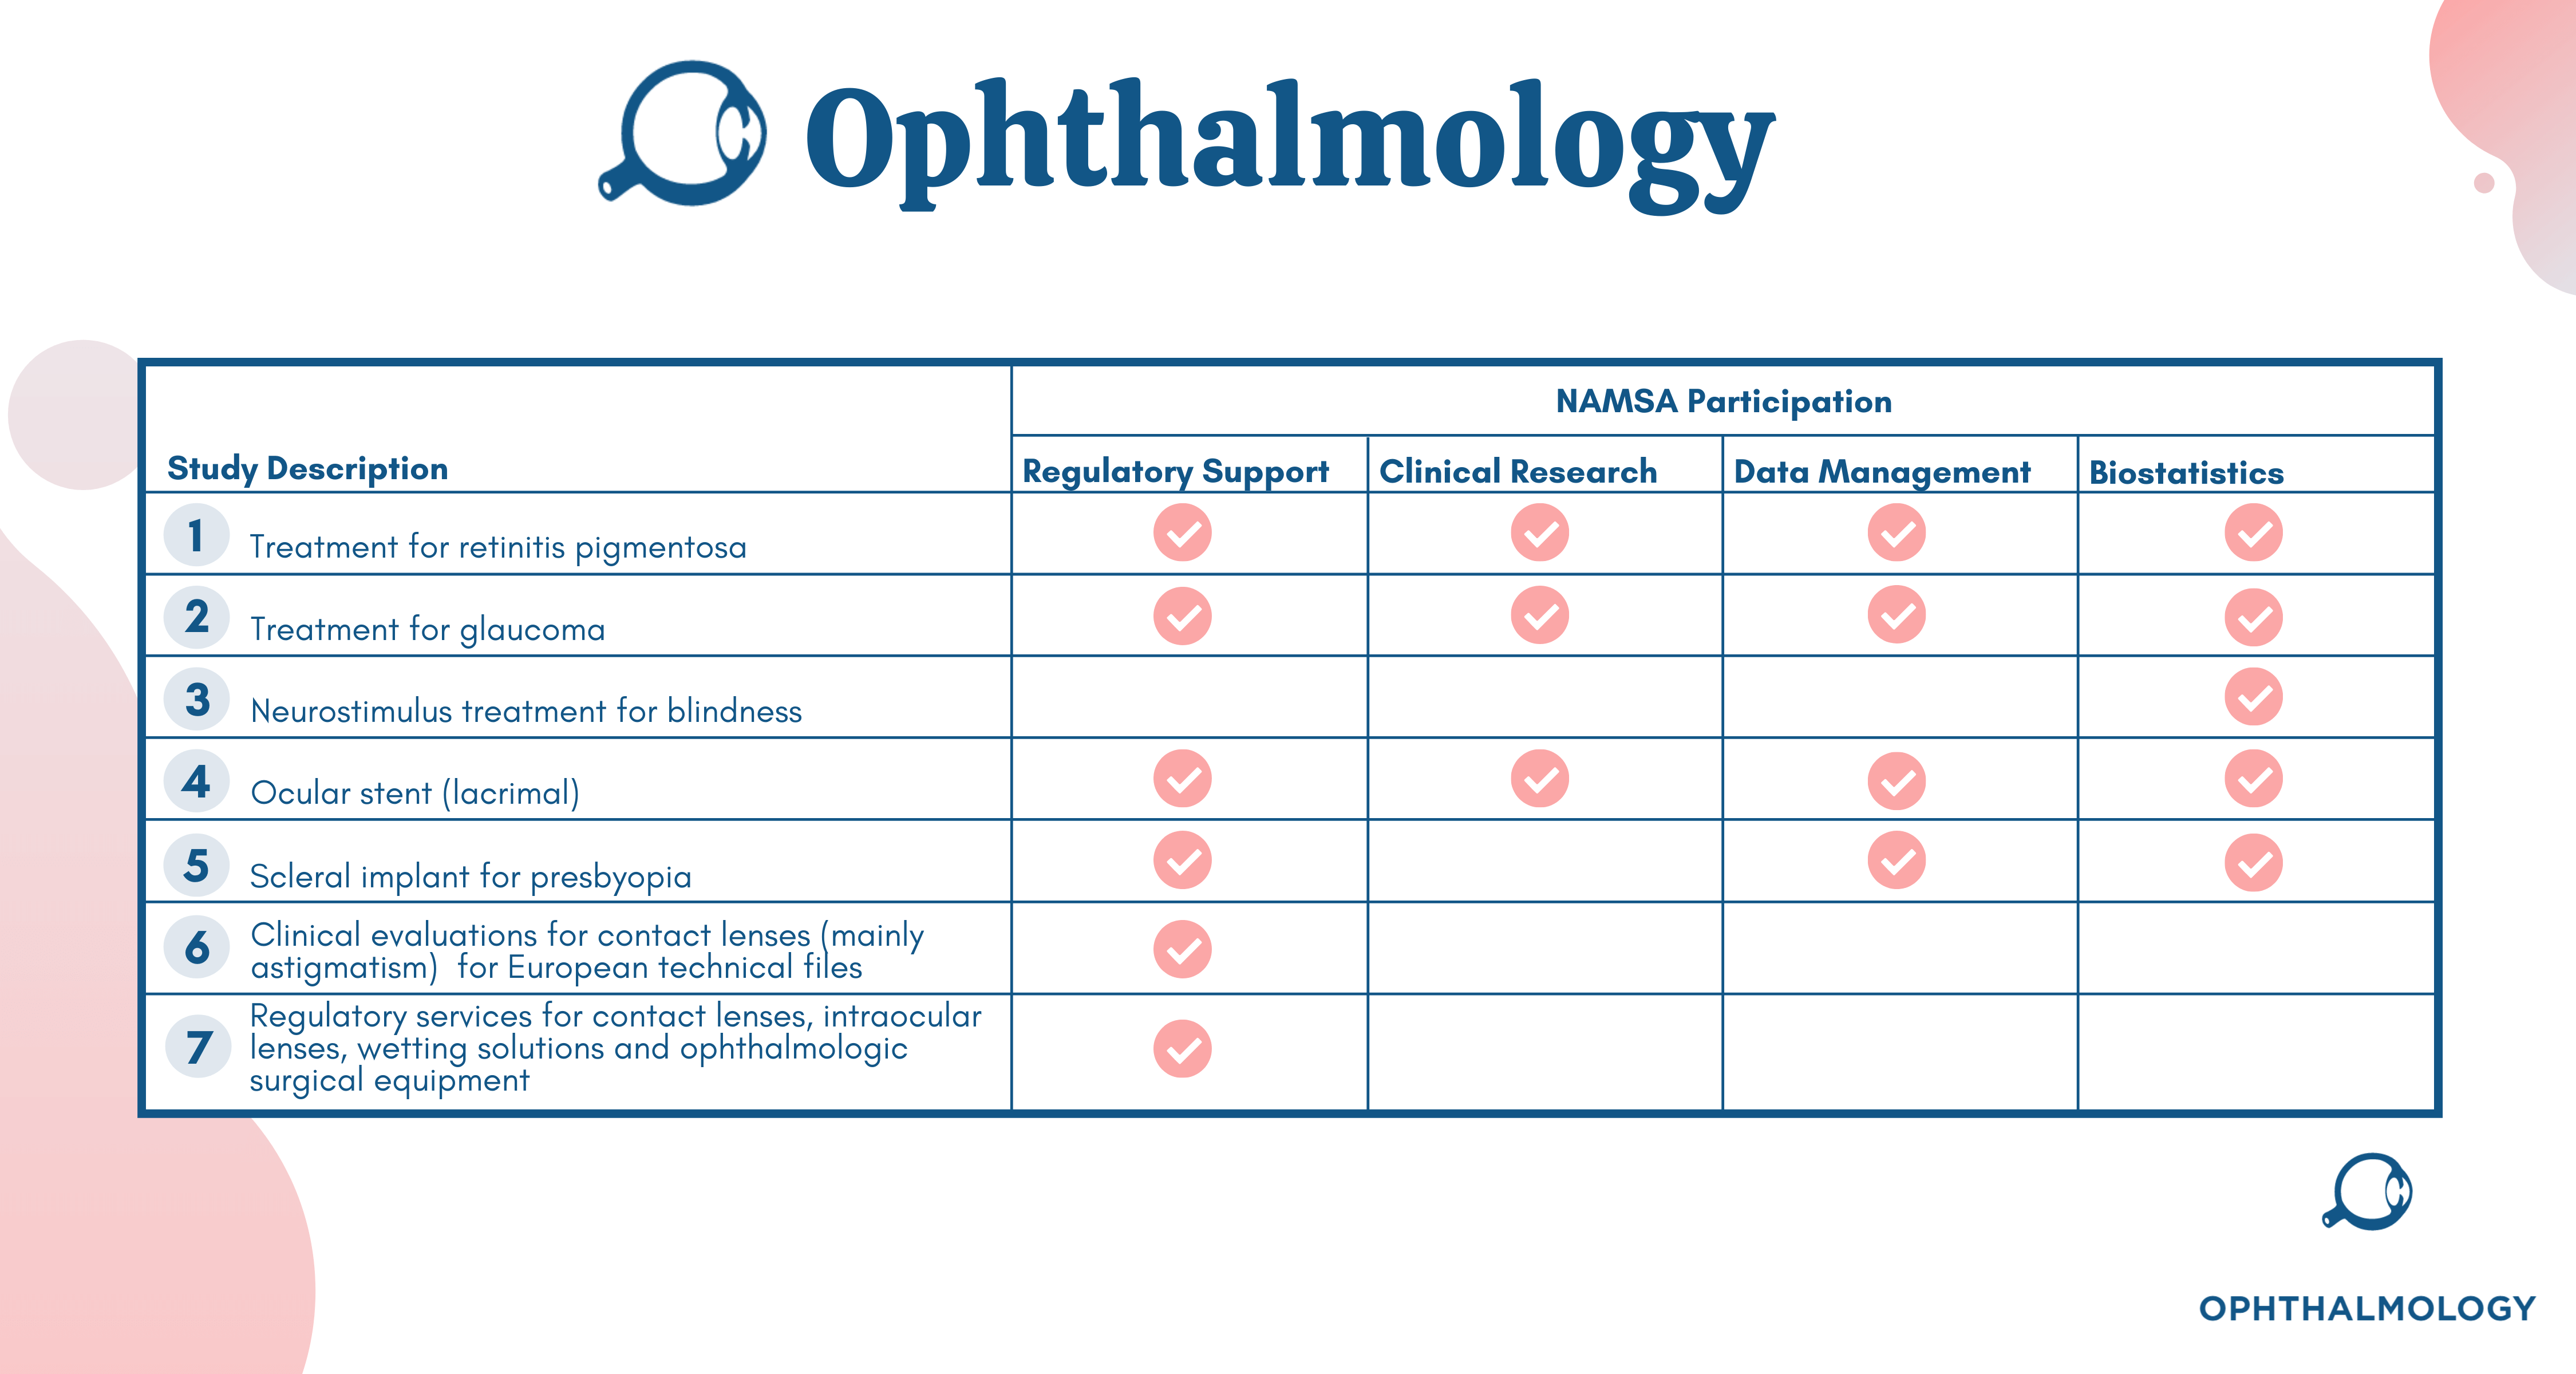 NAMSA - Leading Ophthalmology CRO 